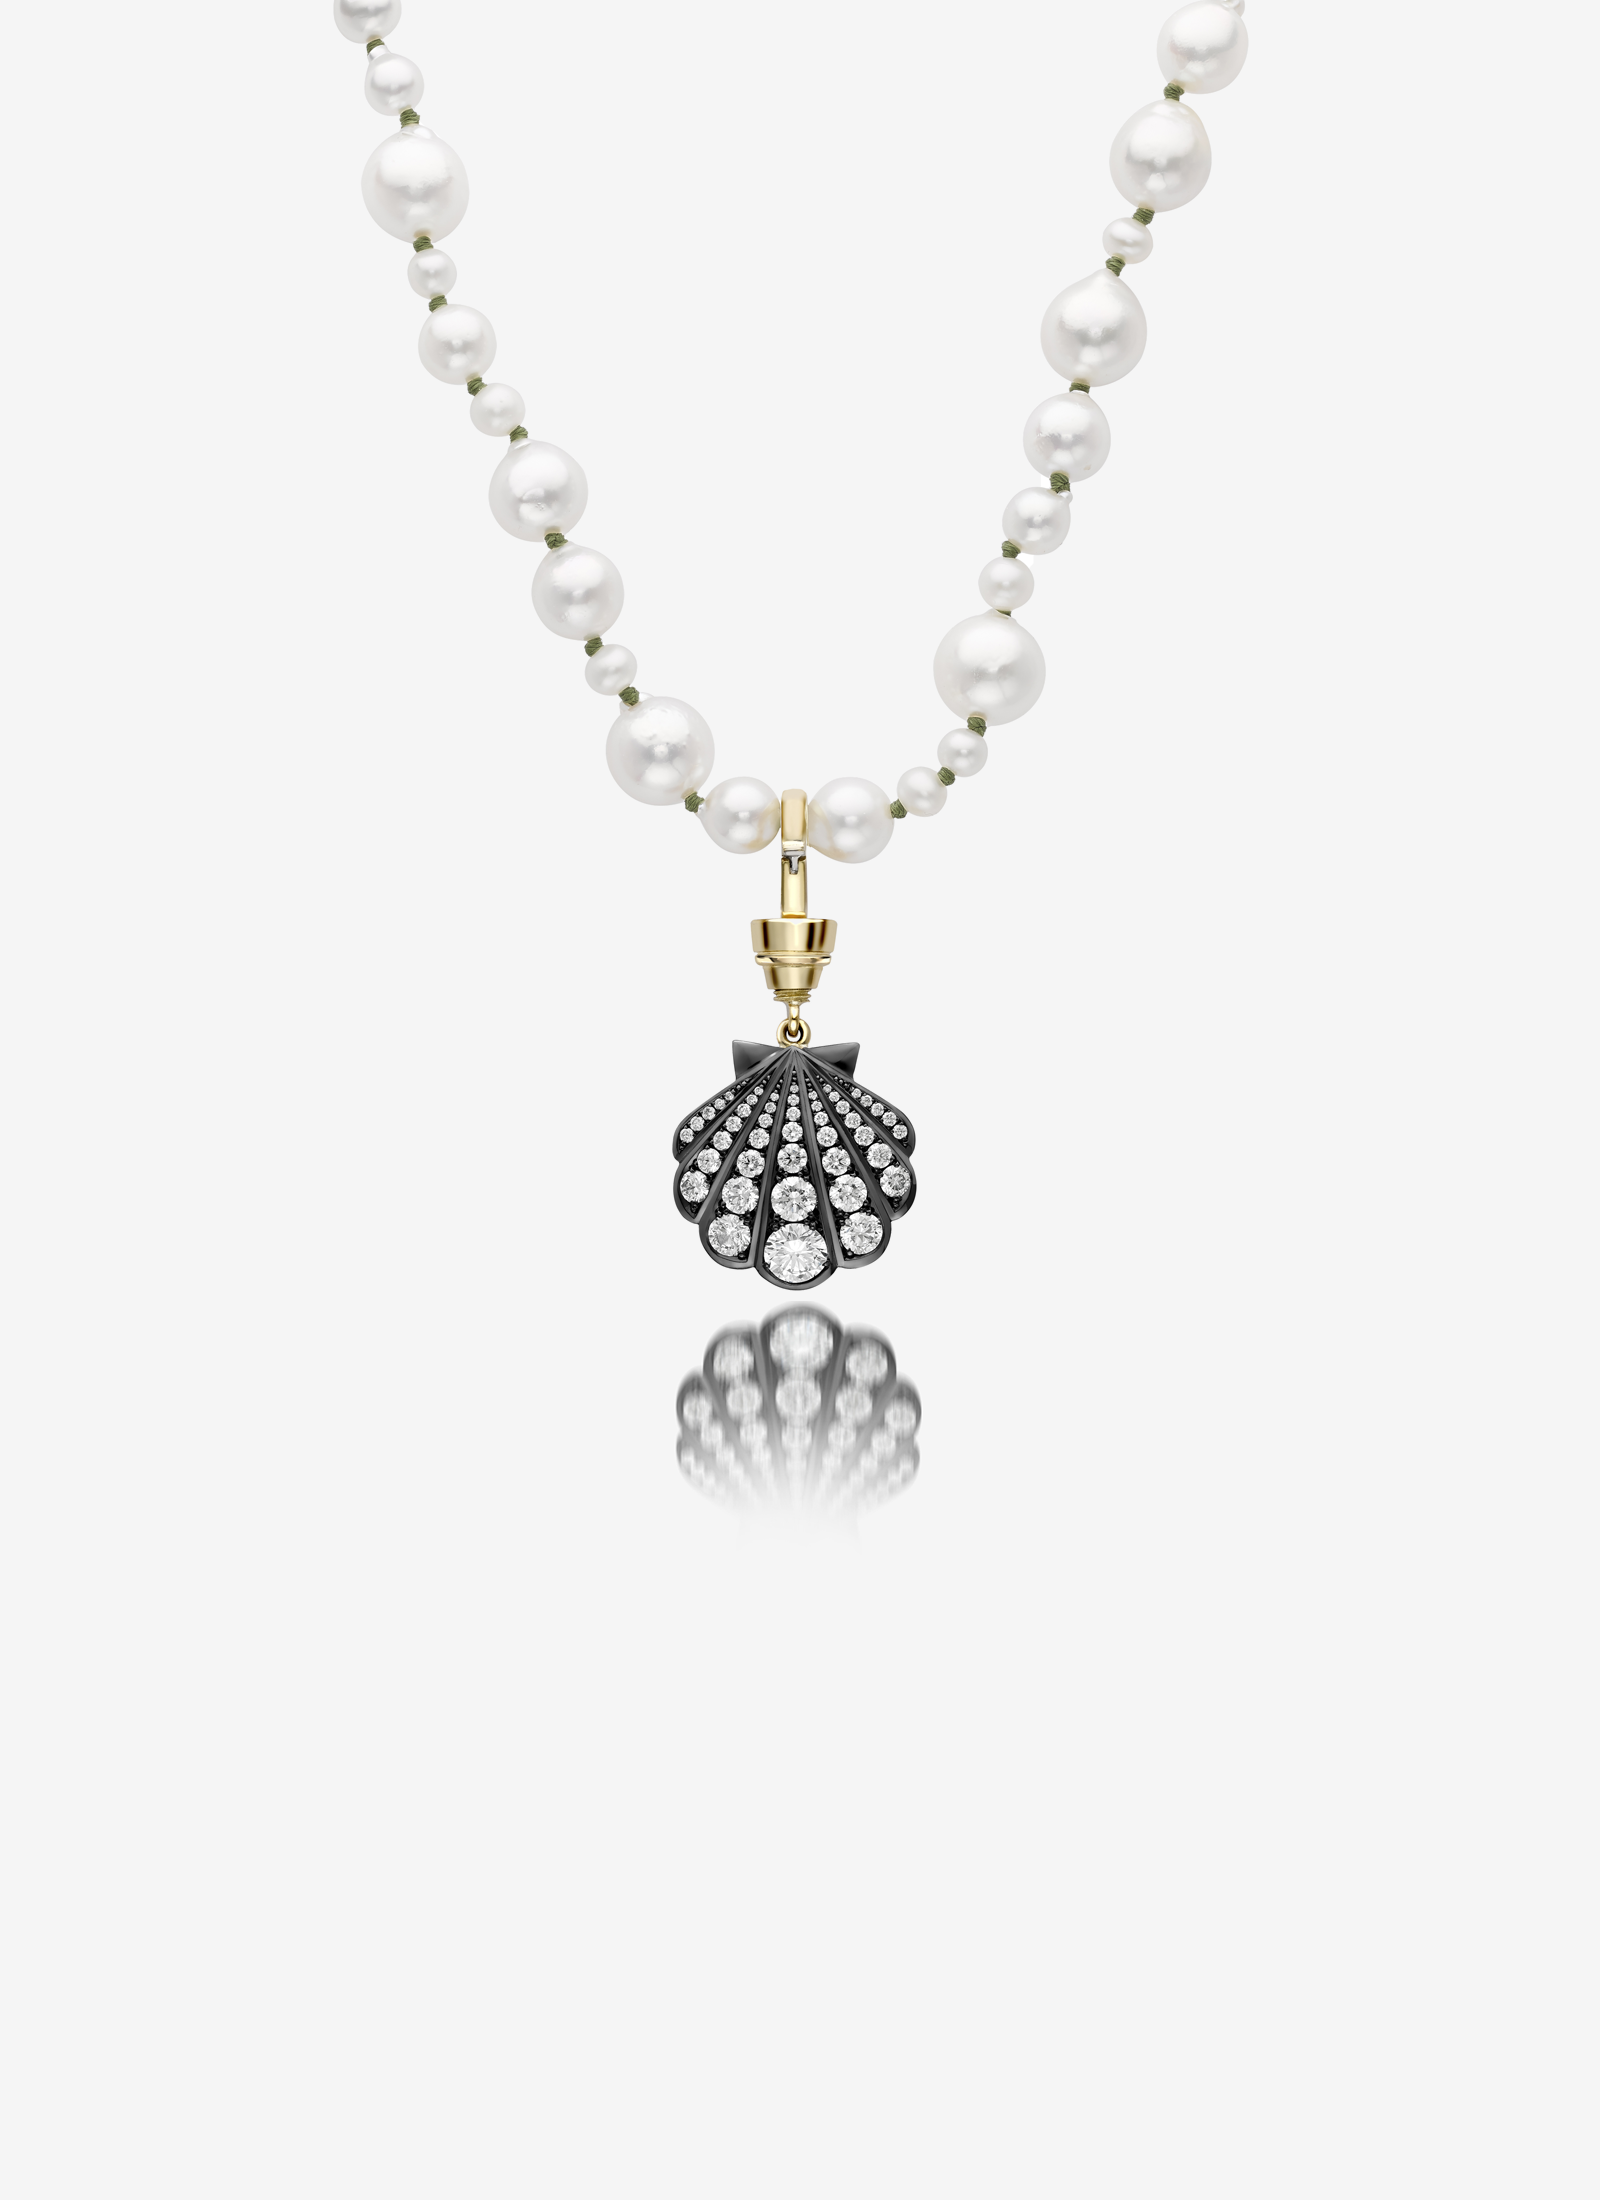 Beaches Pendant - Scallop Shell Drop with Pave Diamond